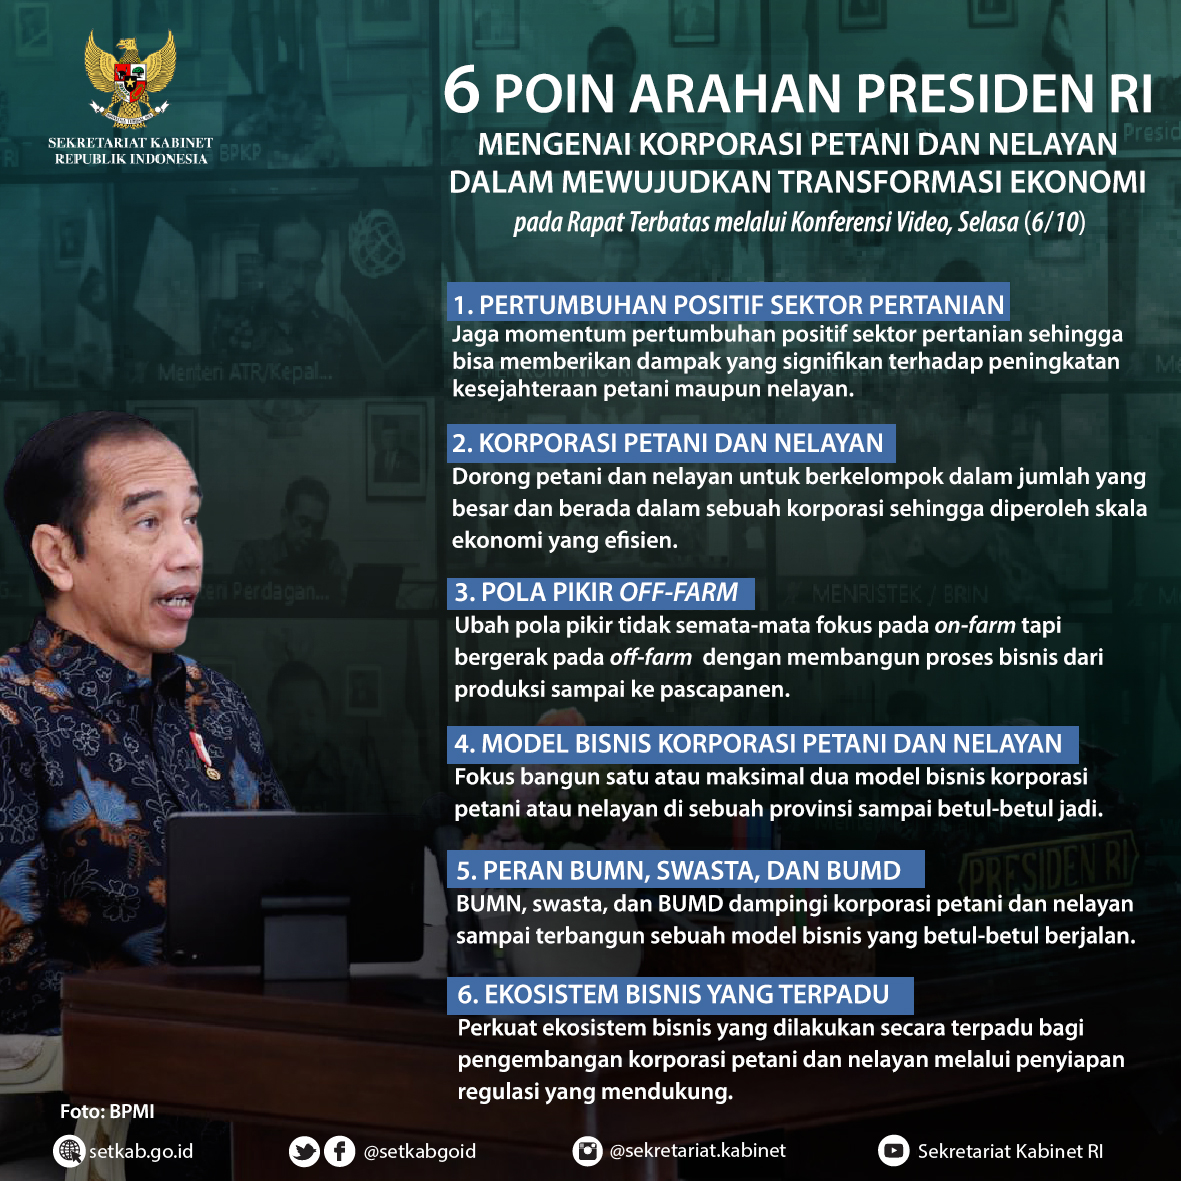 Arahan Presiden Joko Widodo pada Rapat Terbatas mengenai "Korporasi Petani dan Nelayan dalam Mewujudkan Transformasi Ekonomi", Selasa (6/10)